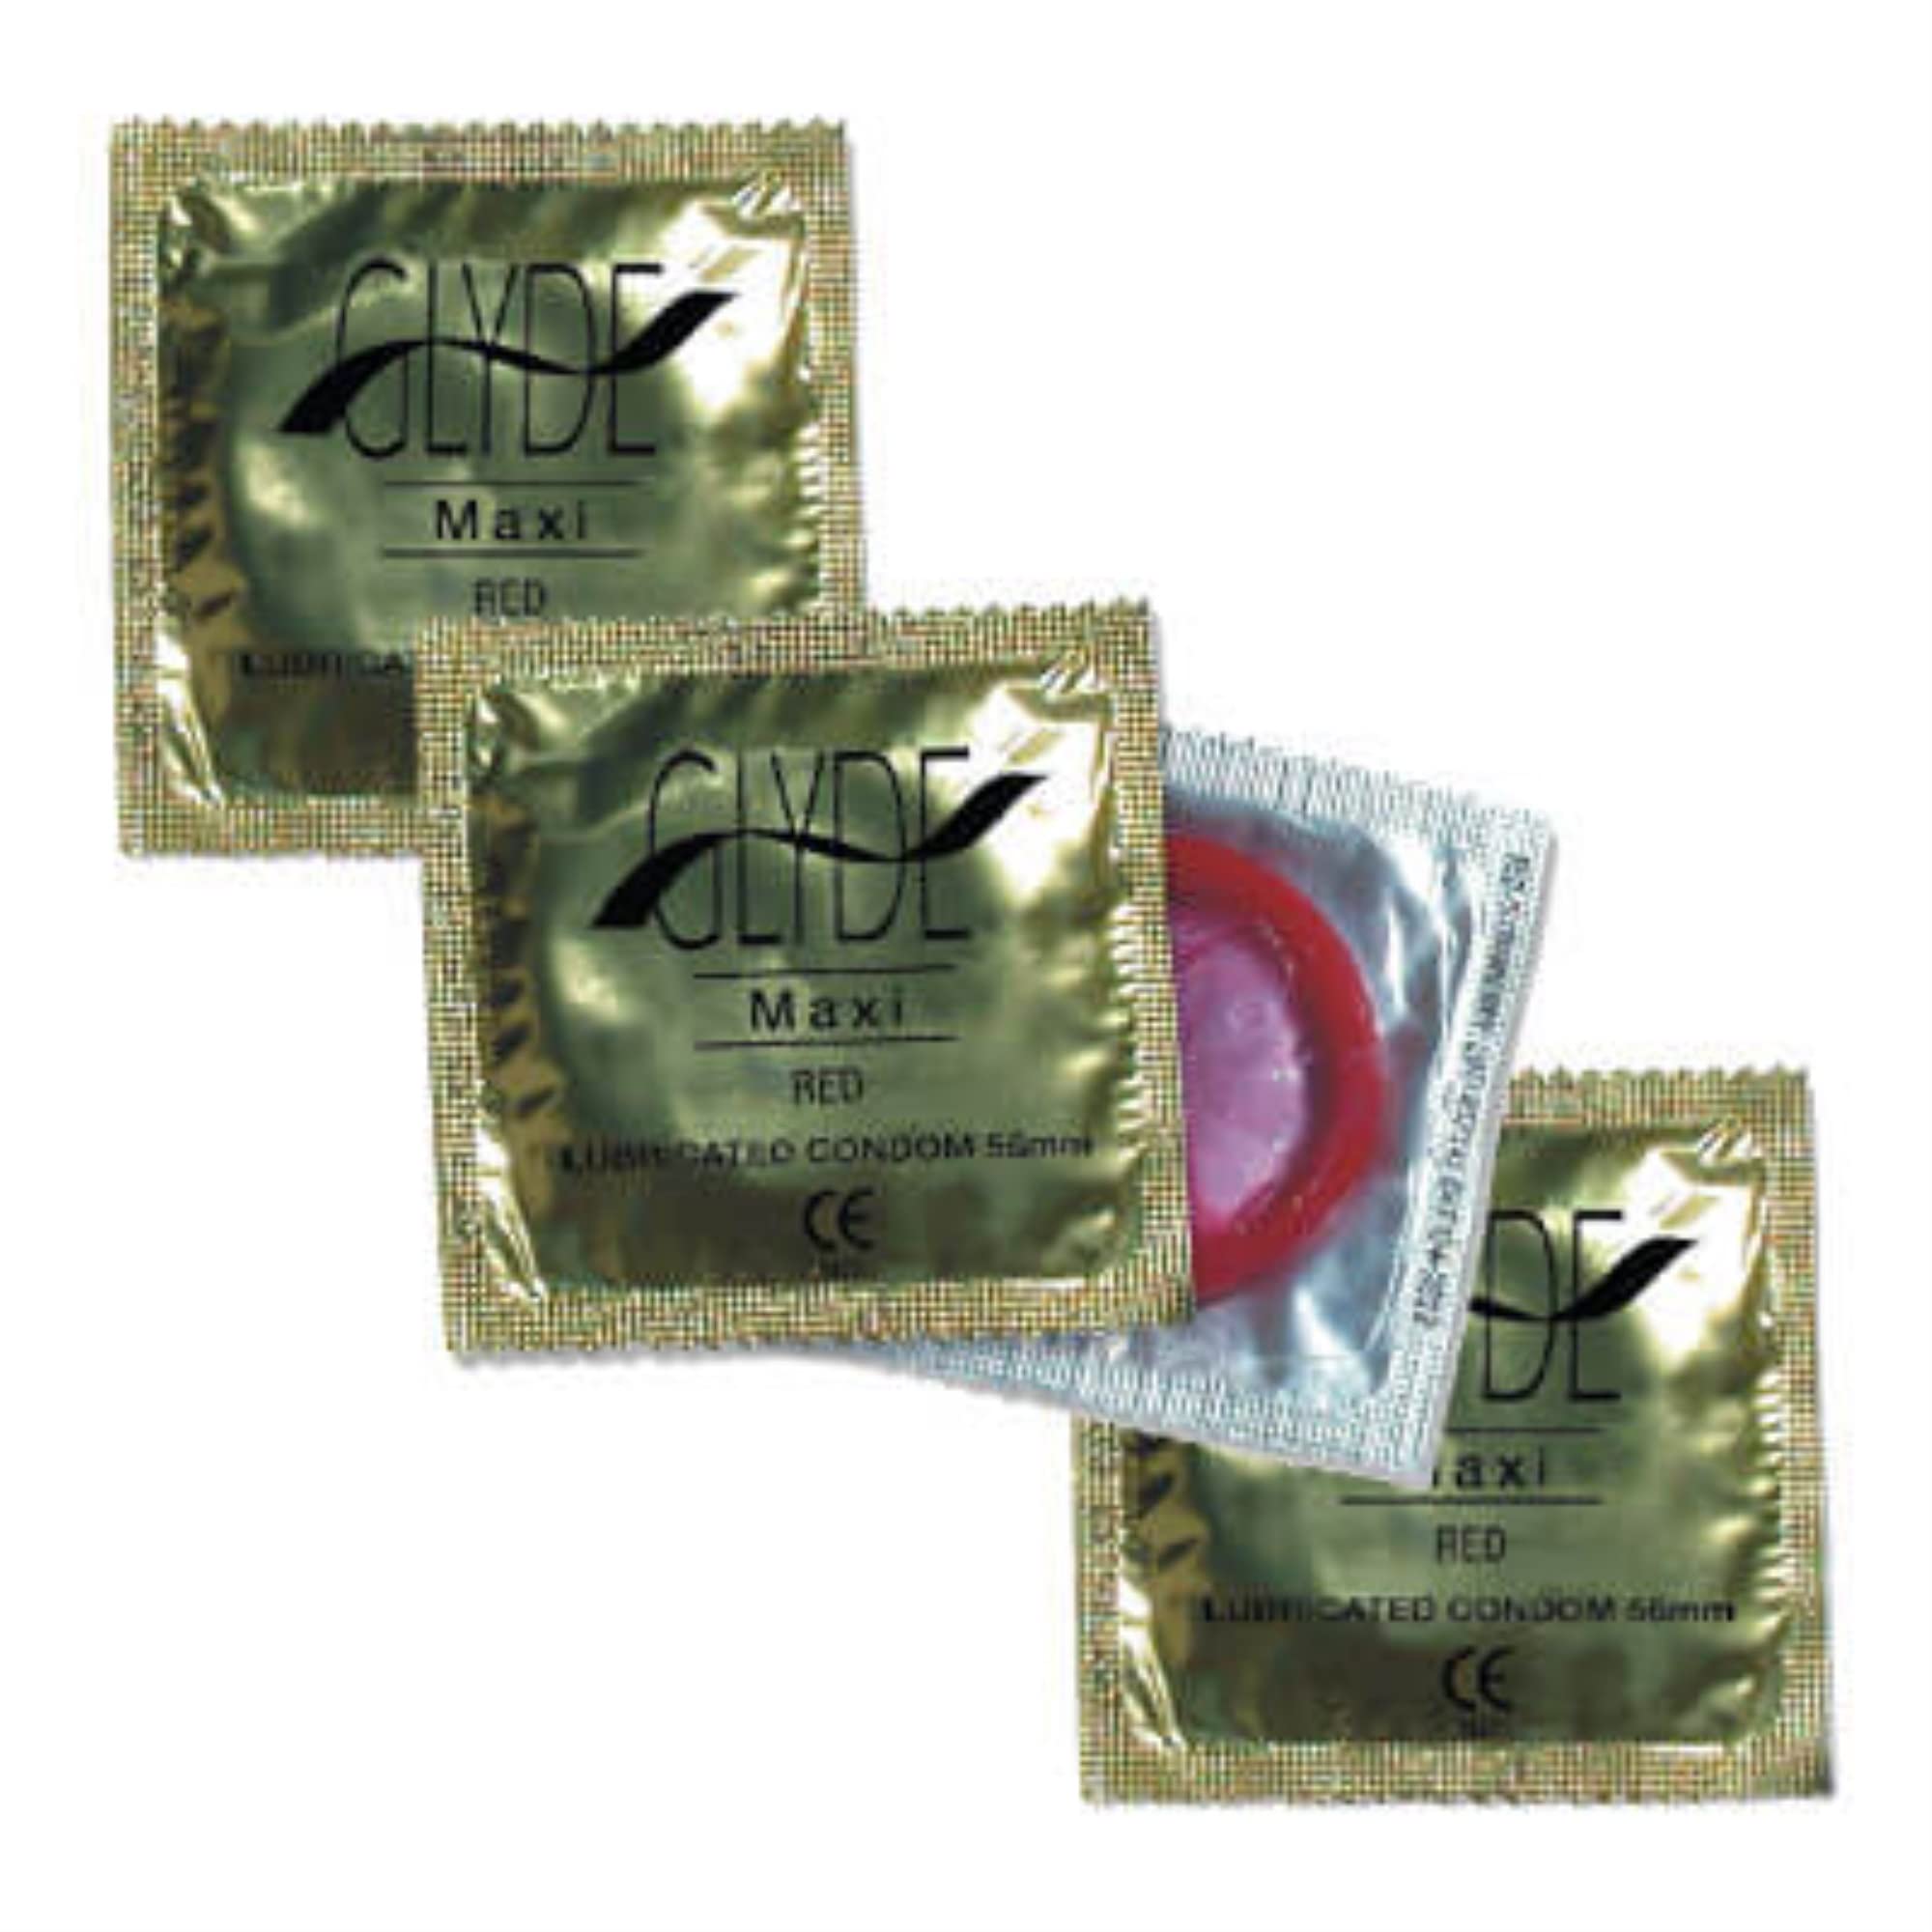 Glyde Ultra Maxi Red 100 große Condome, rote XXL-Kondome, vegane Kondome ohne Casein